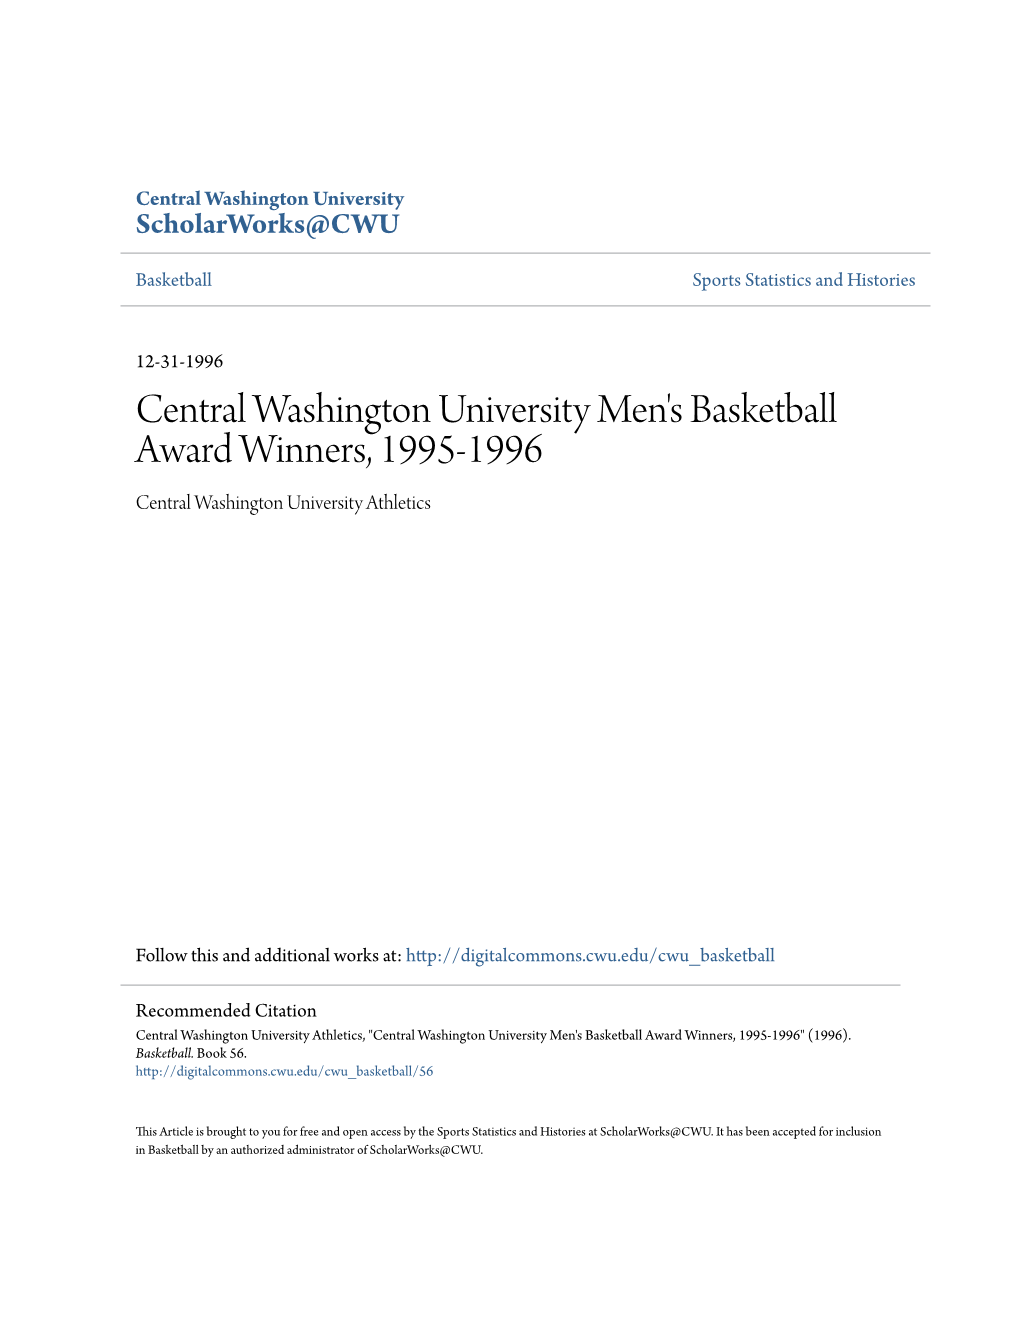 Central Washington University Men's Basketball Award Winners, 1995-1996 Central Washington University Athletics